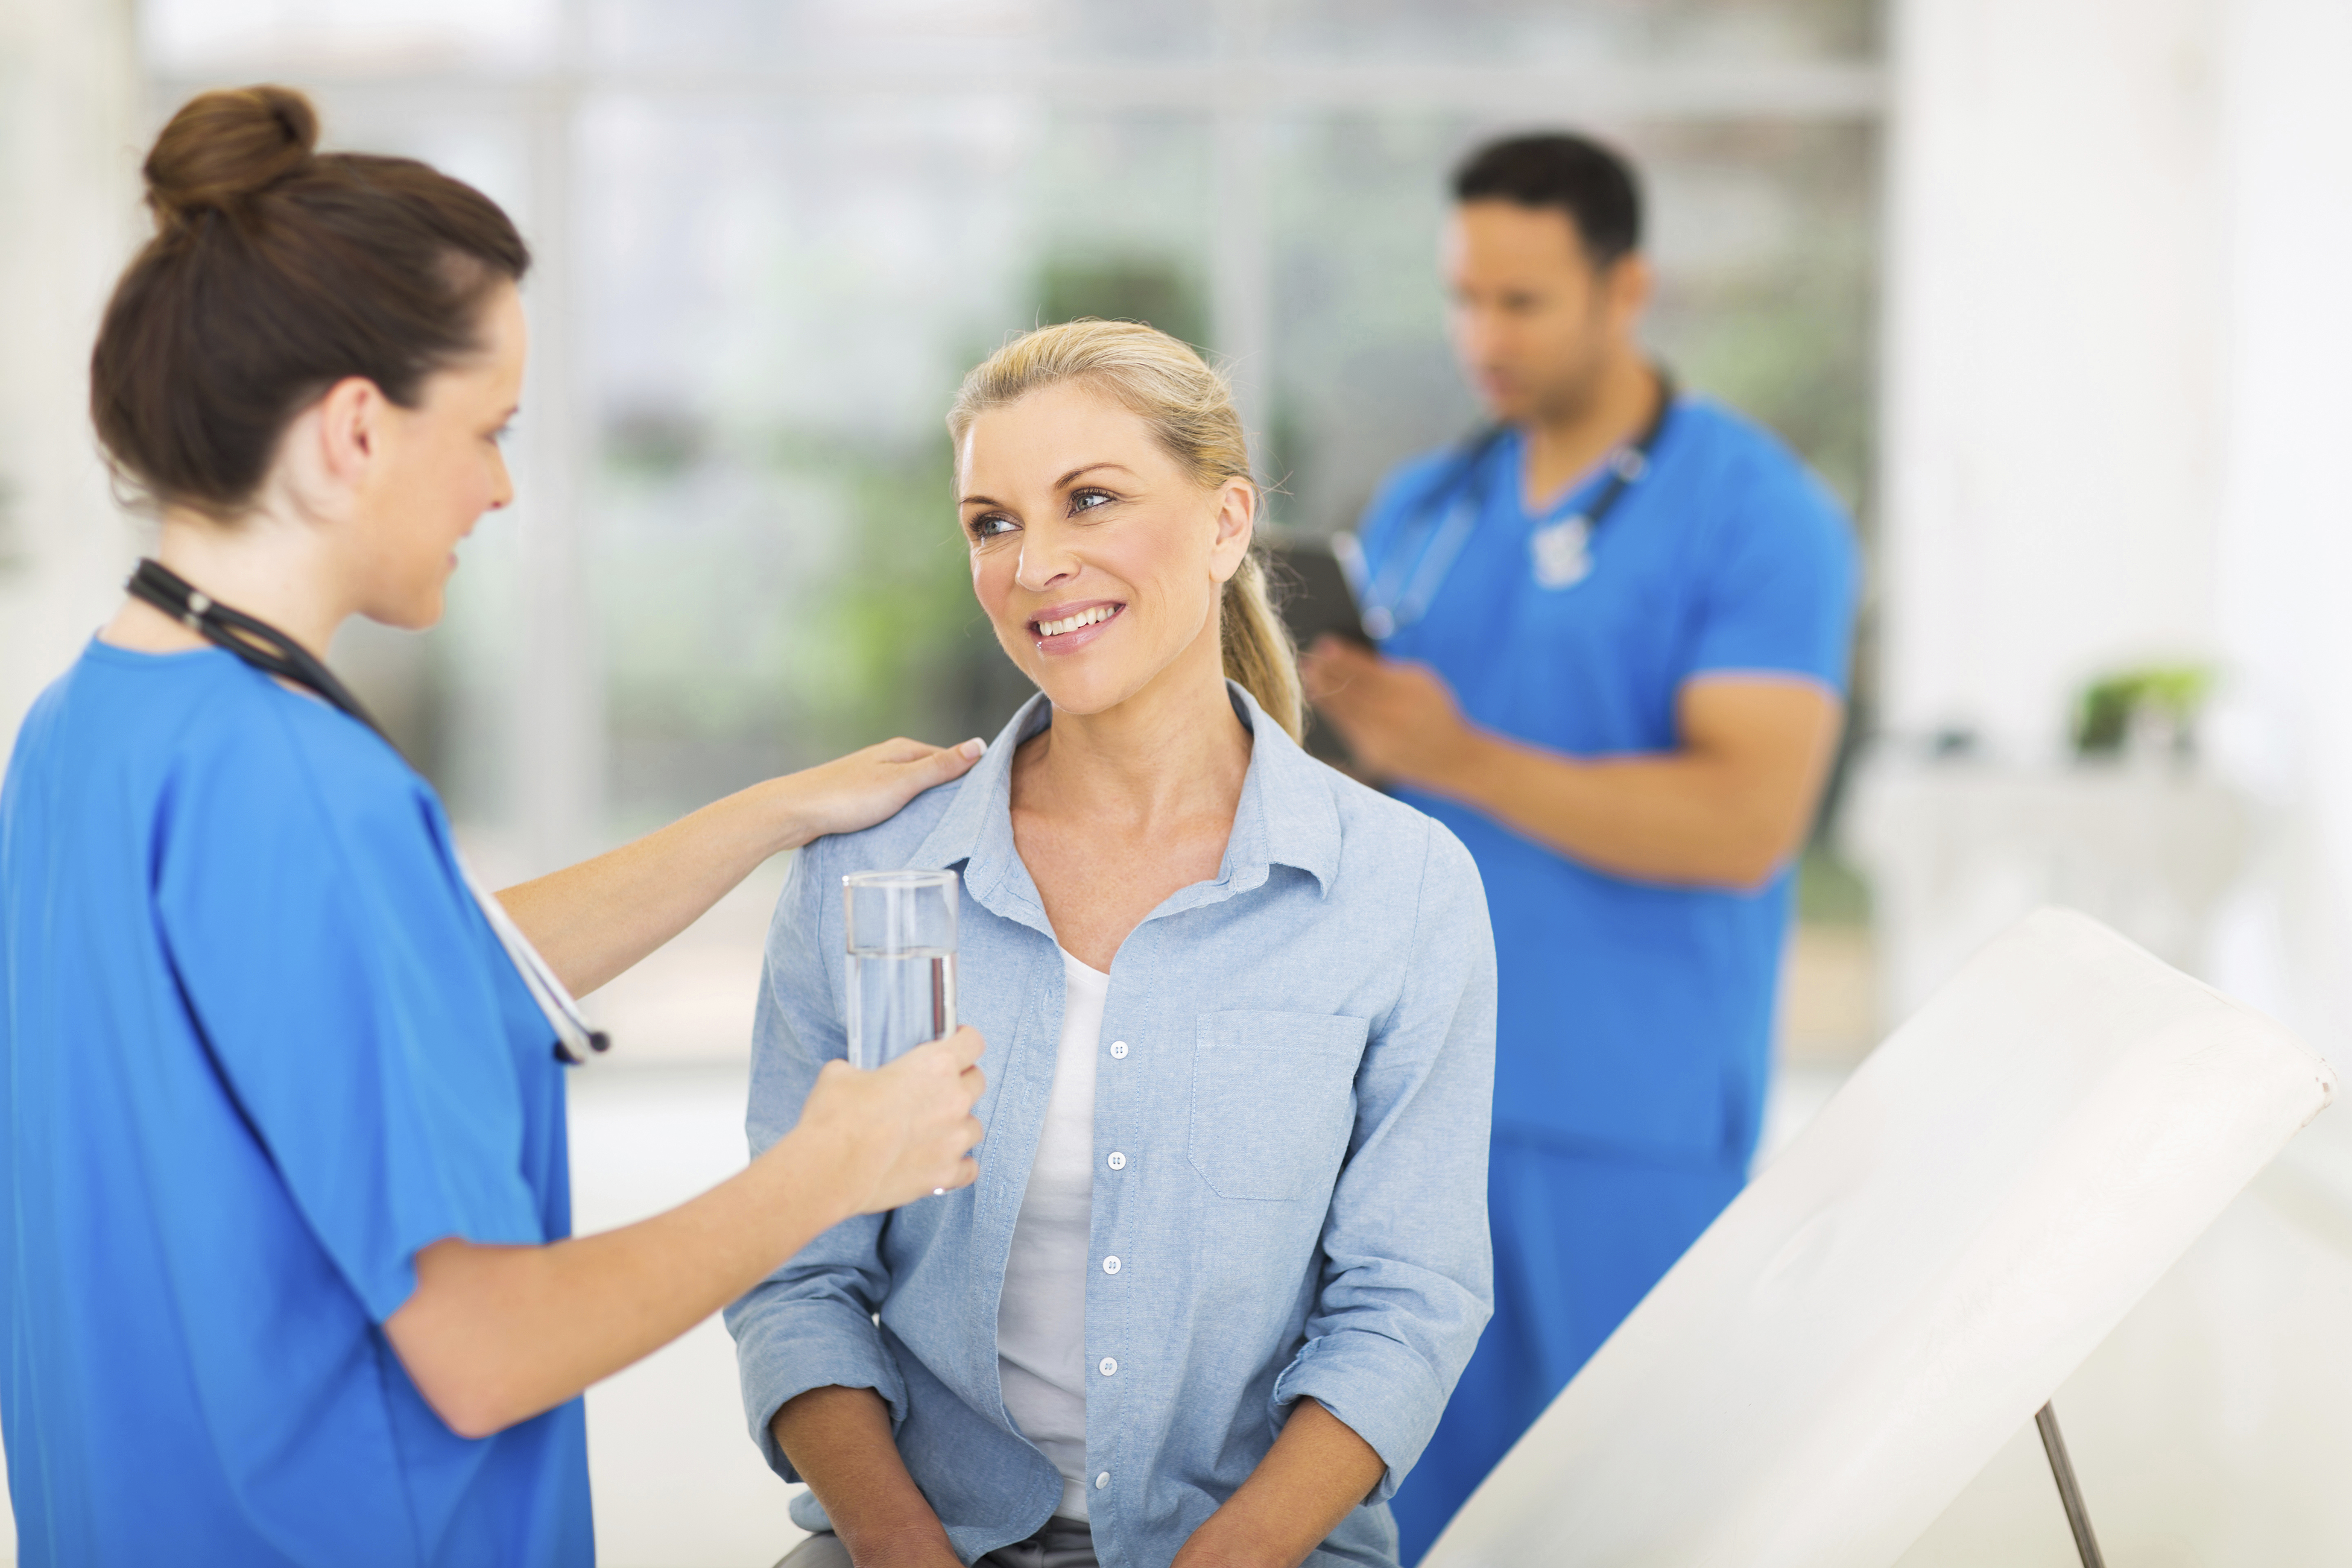 Utah Travel Nursing Jobs Millenia Medical Staffing 888-686-6877